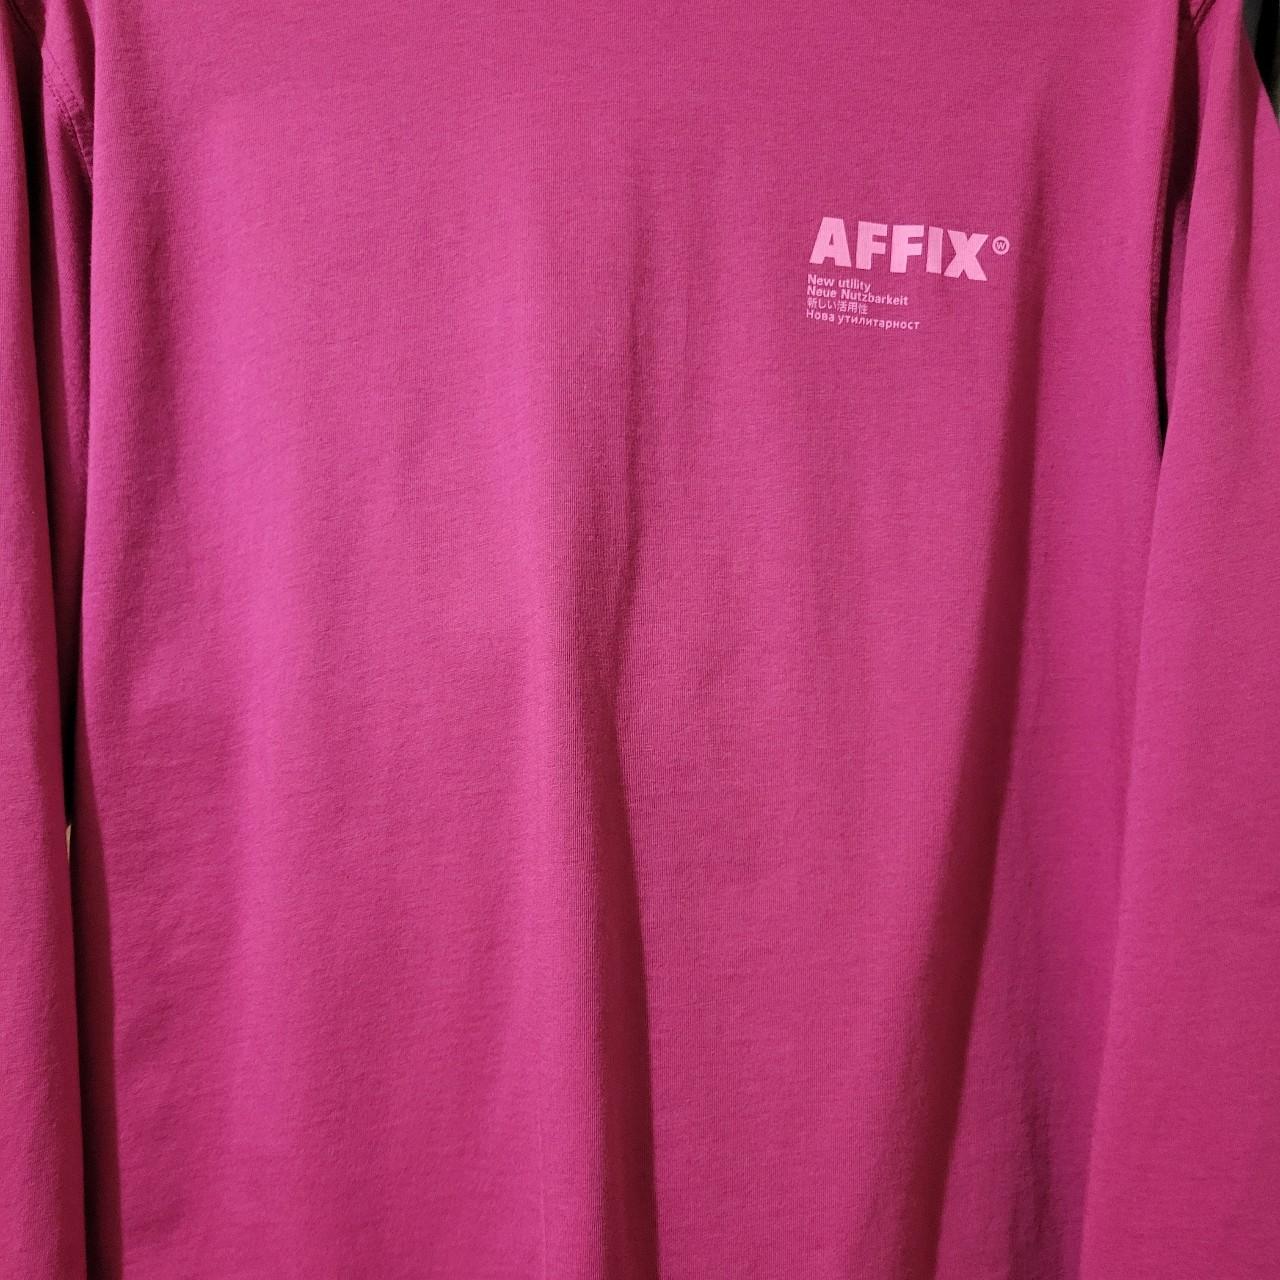 Affix Men's T-shirt